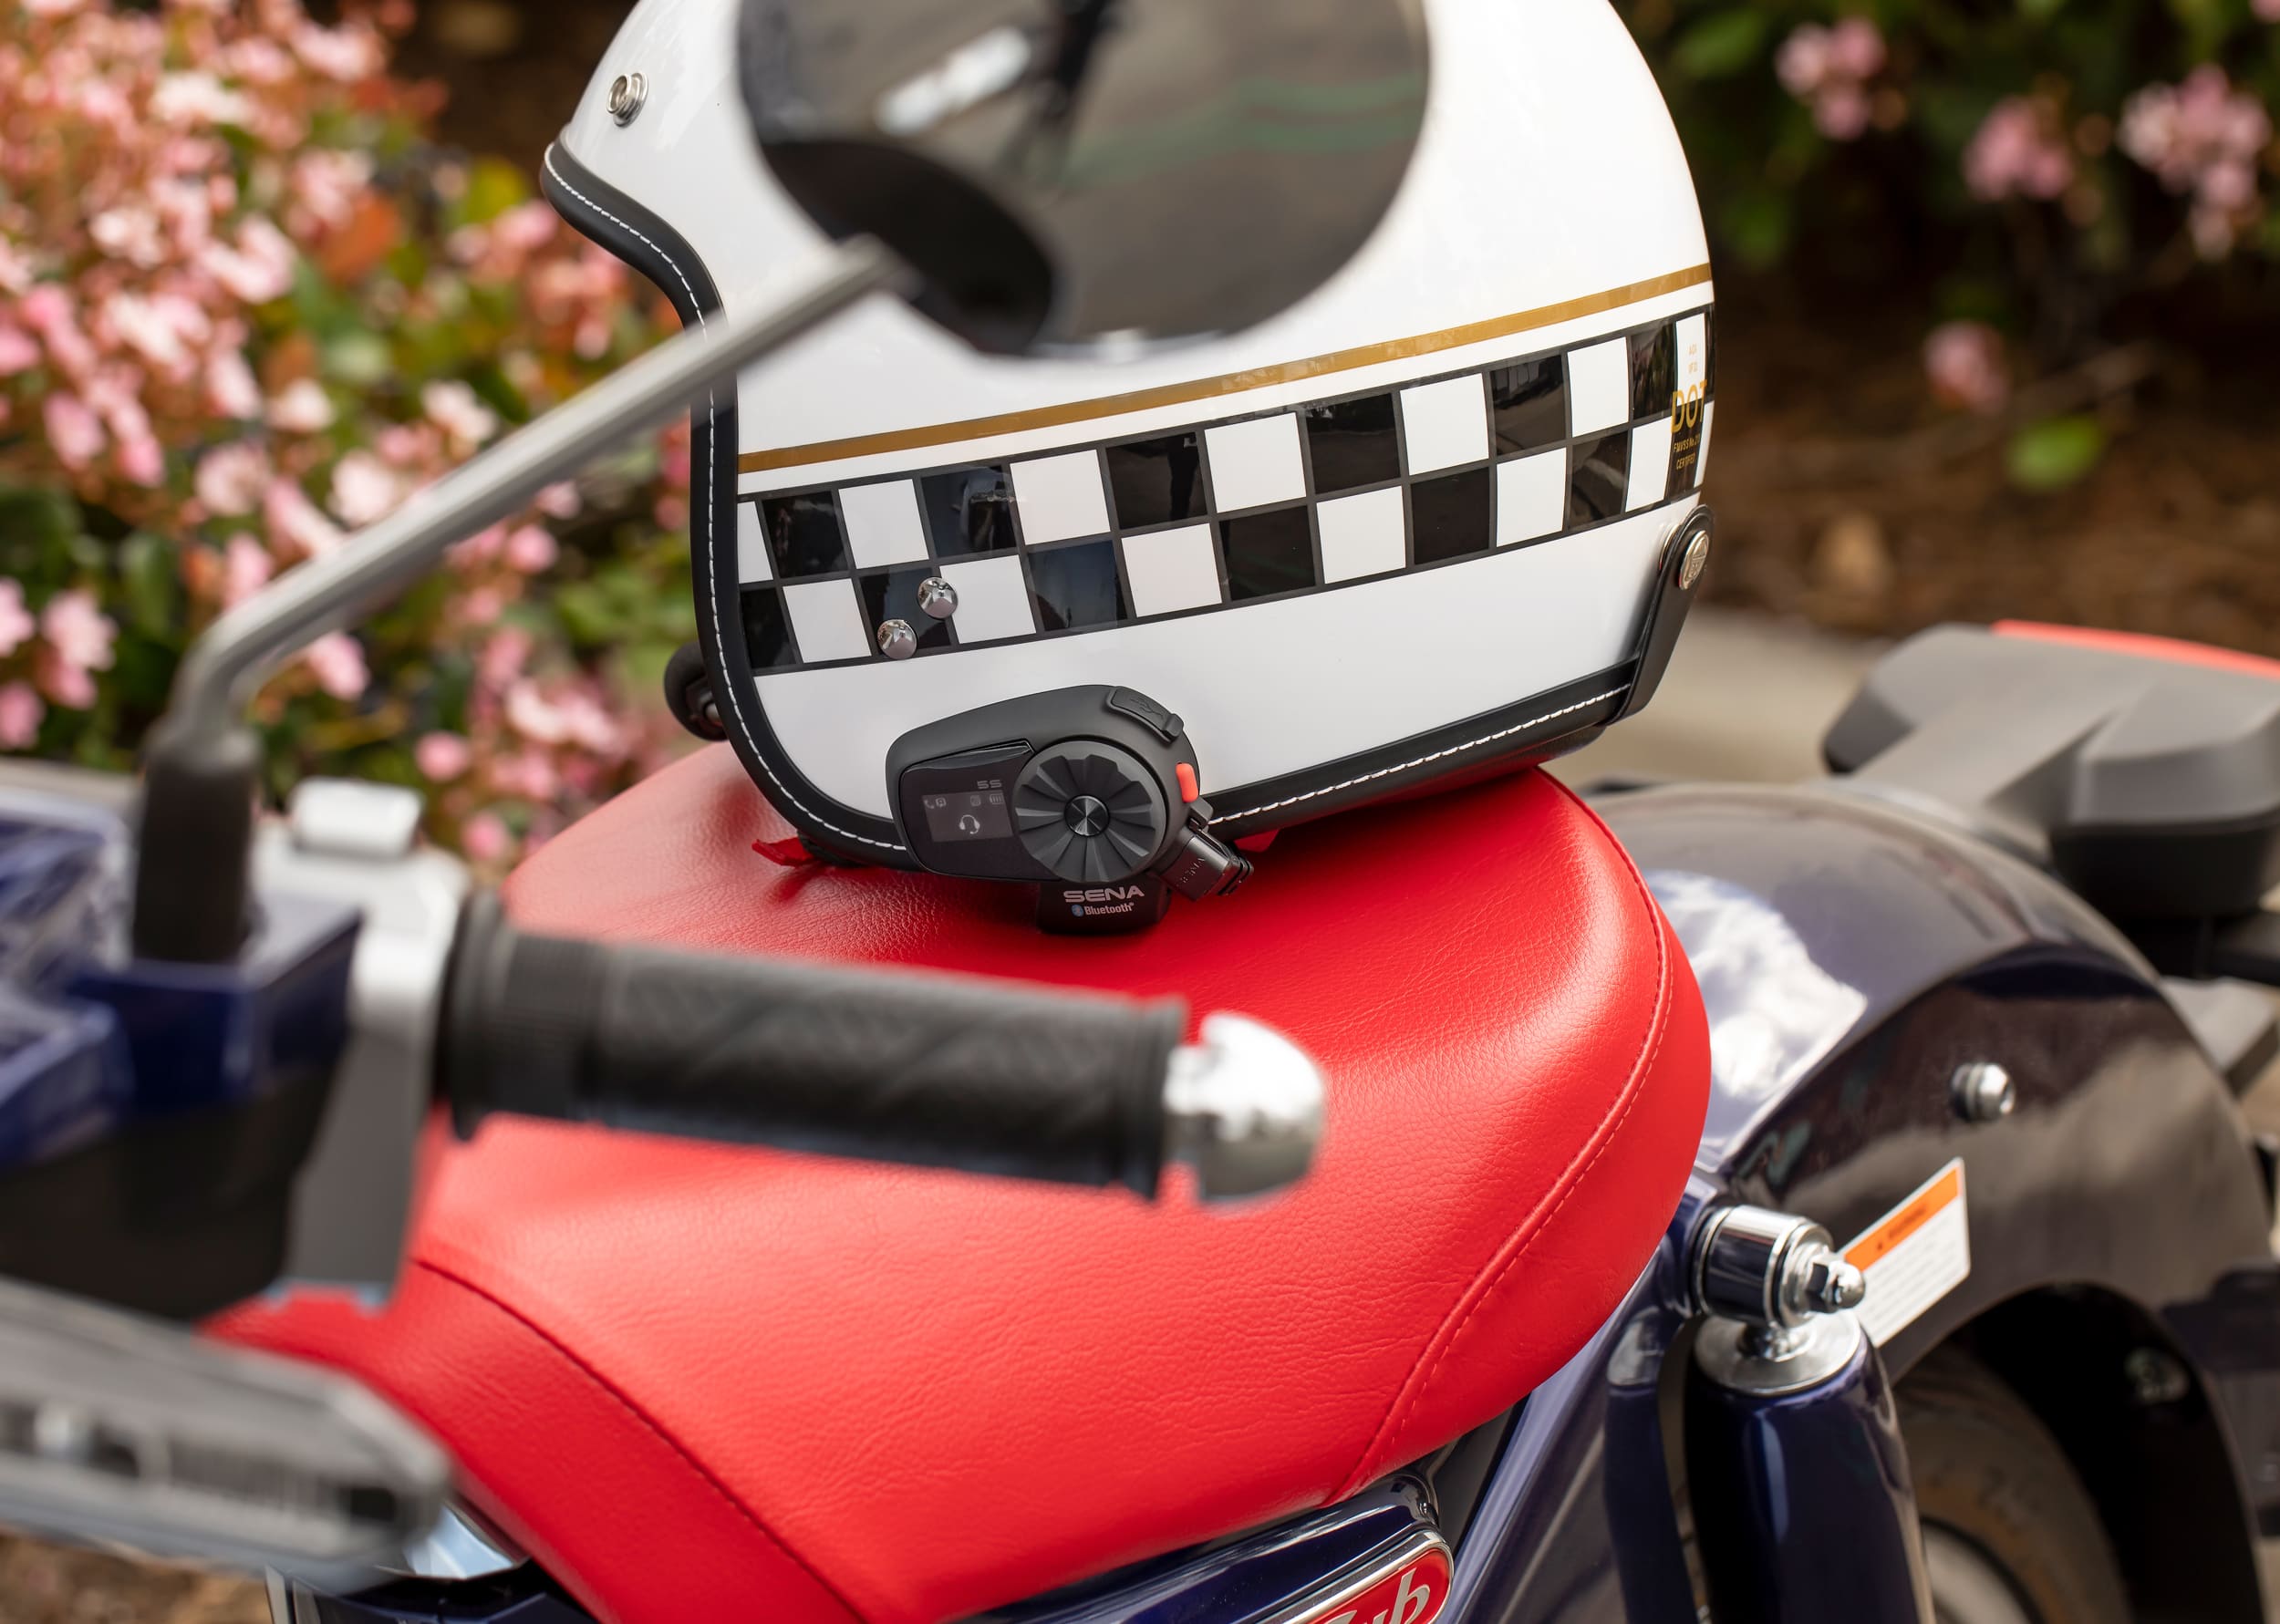 Intercom moto sans fil bluetooth pas cher : kit de 2 micro-casques